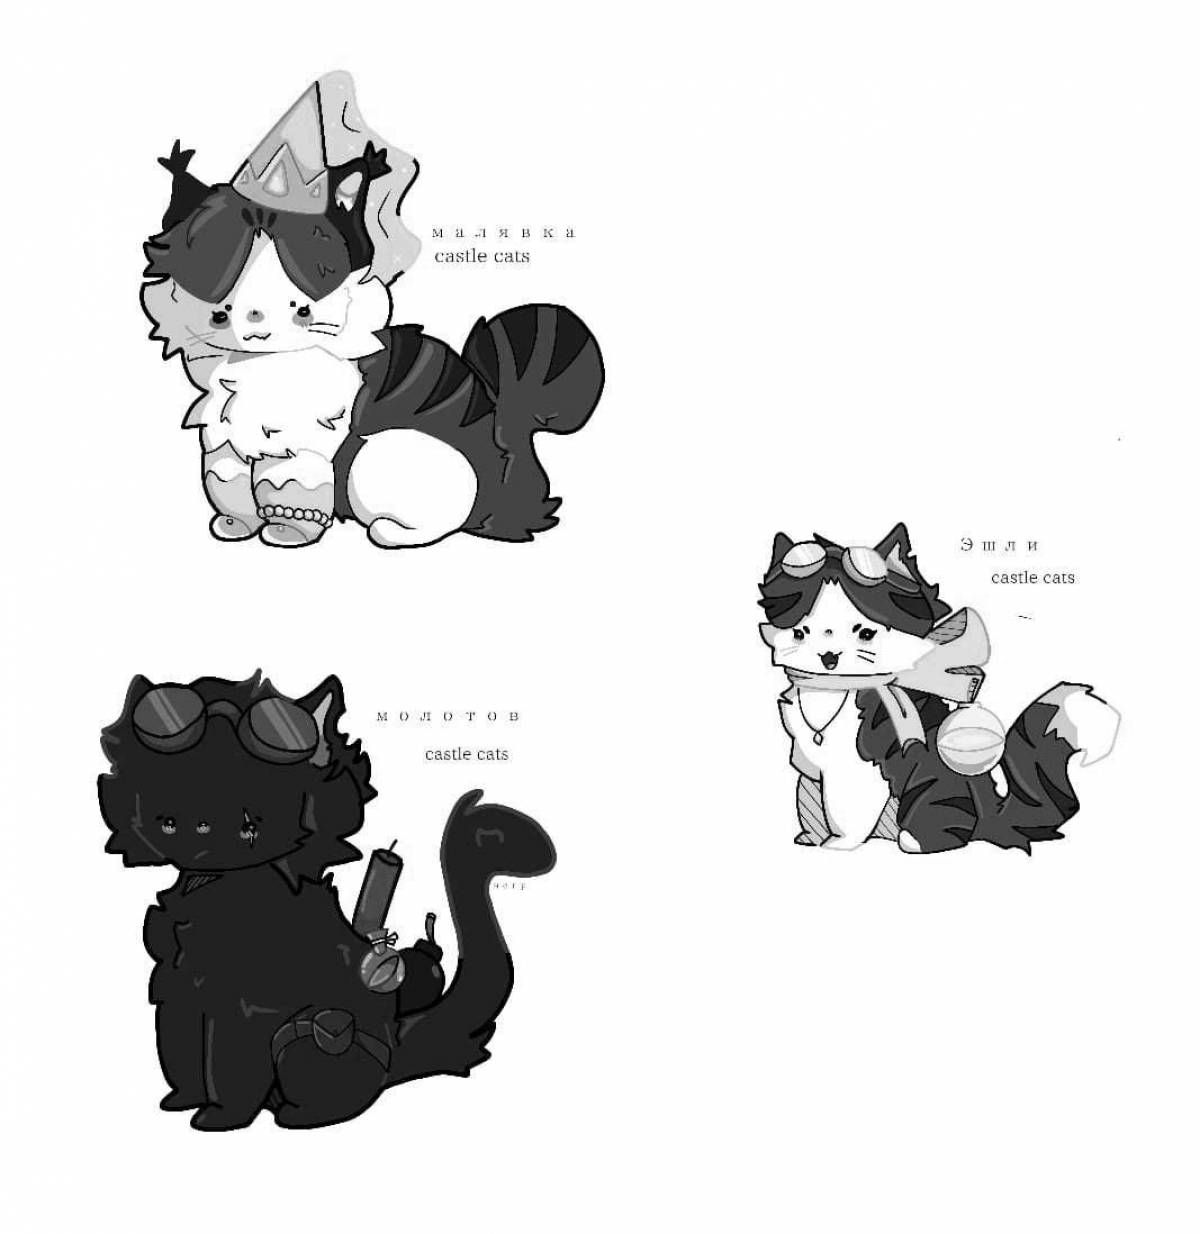 Cute castle cats coloring page